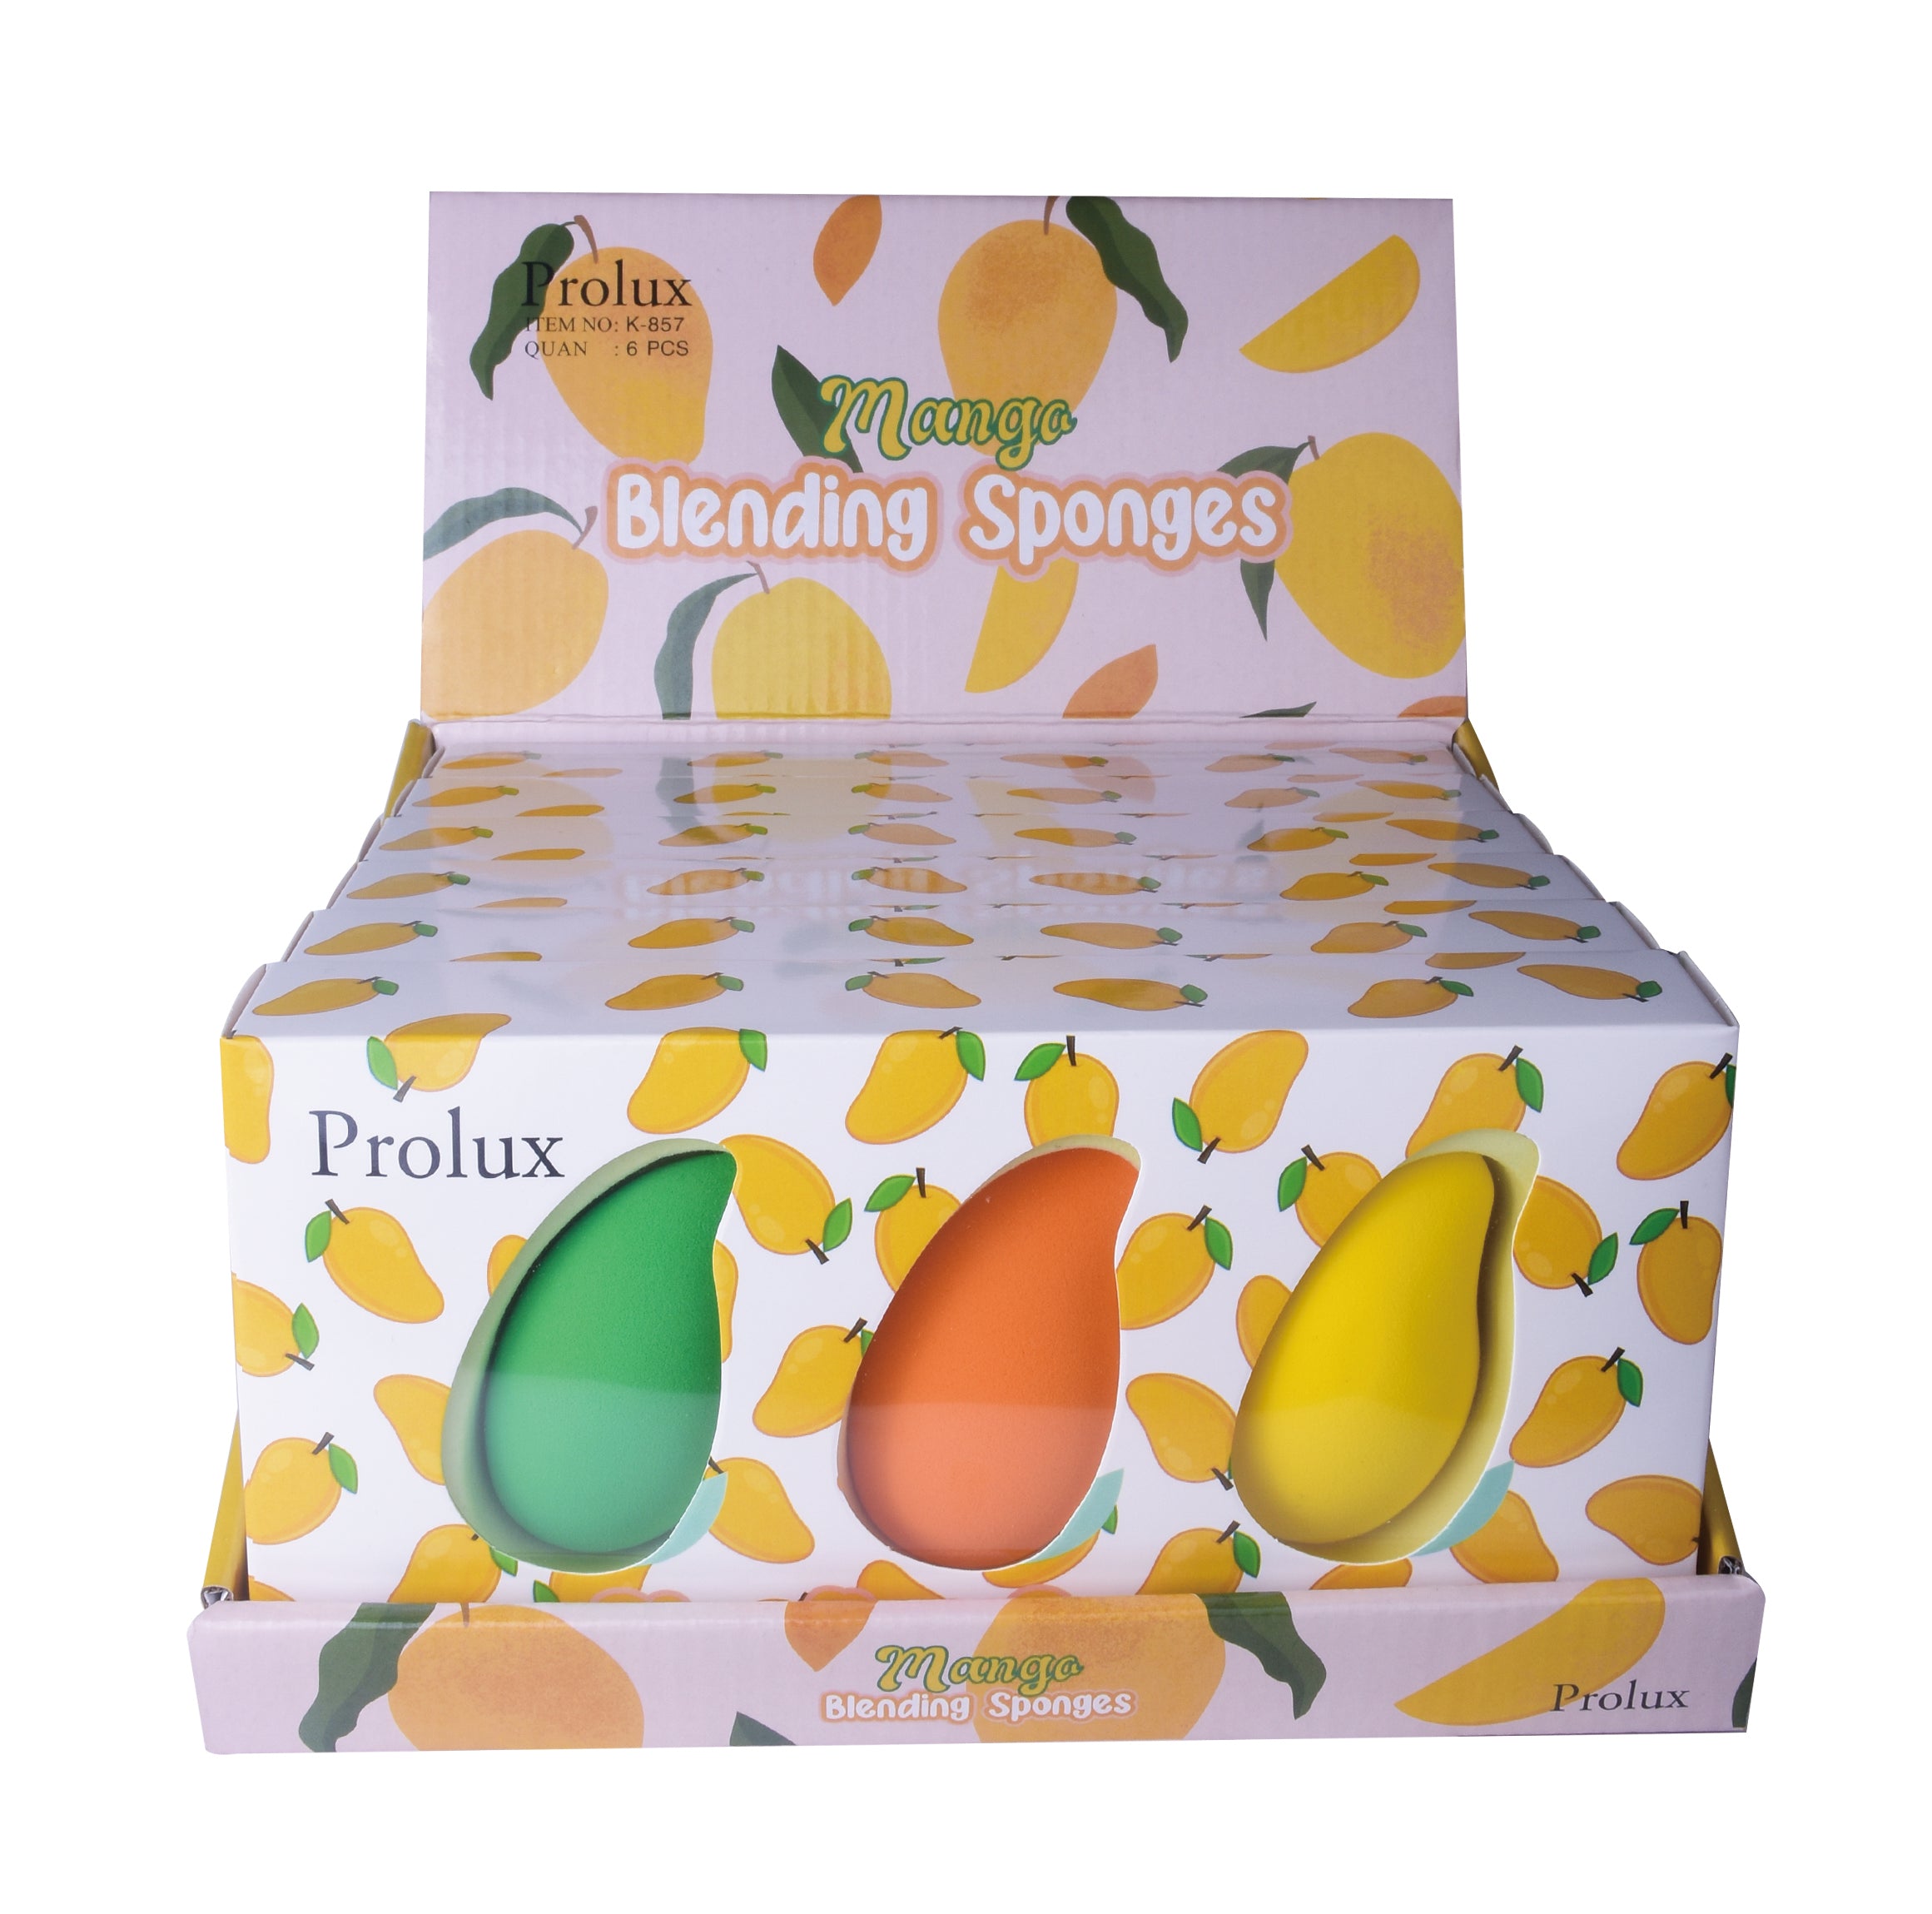 Esponjas mezcladoras de mango Prolux